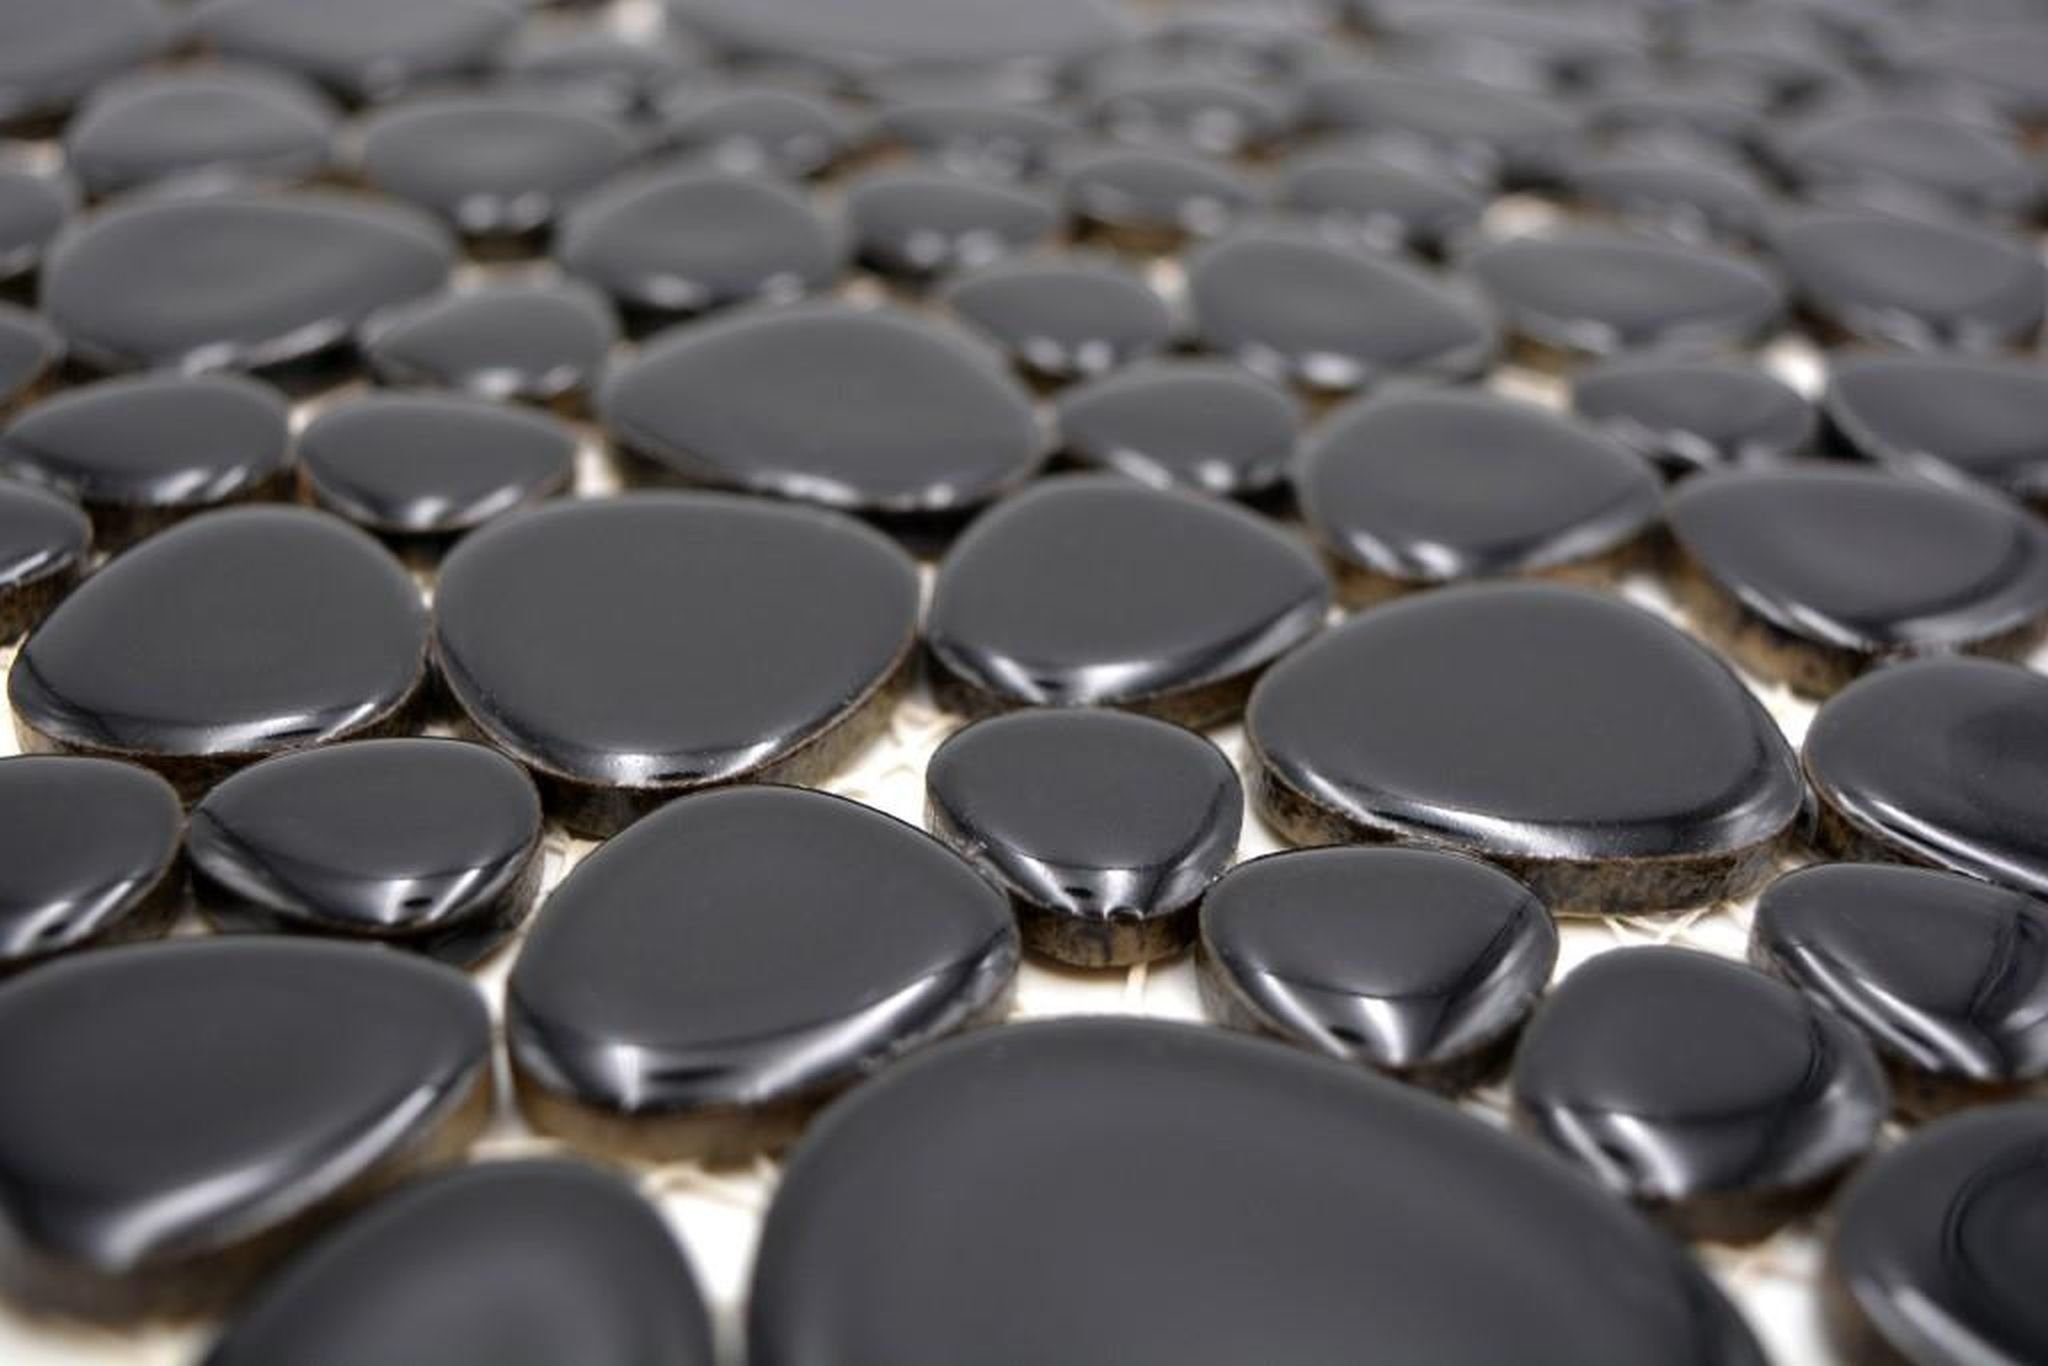 / Matten glänzend Mosaikfliesen 10 Keramikmosaik Mosani Mosaikfliesen schwarz Oval